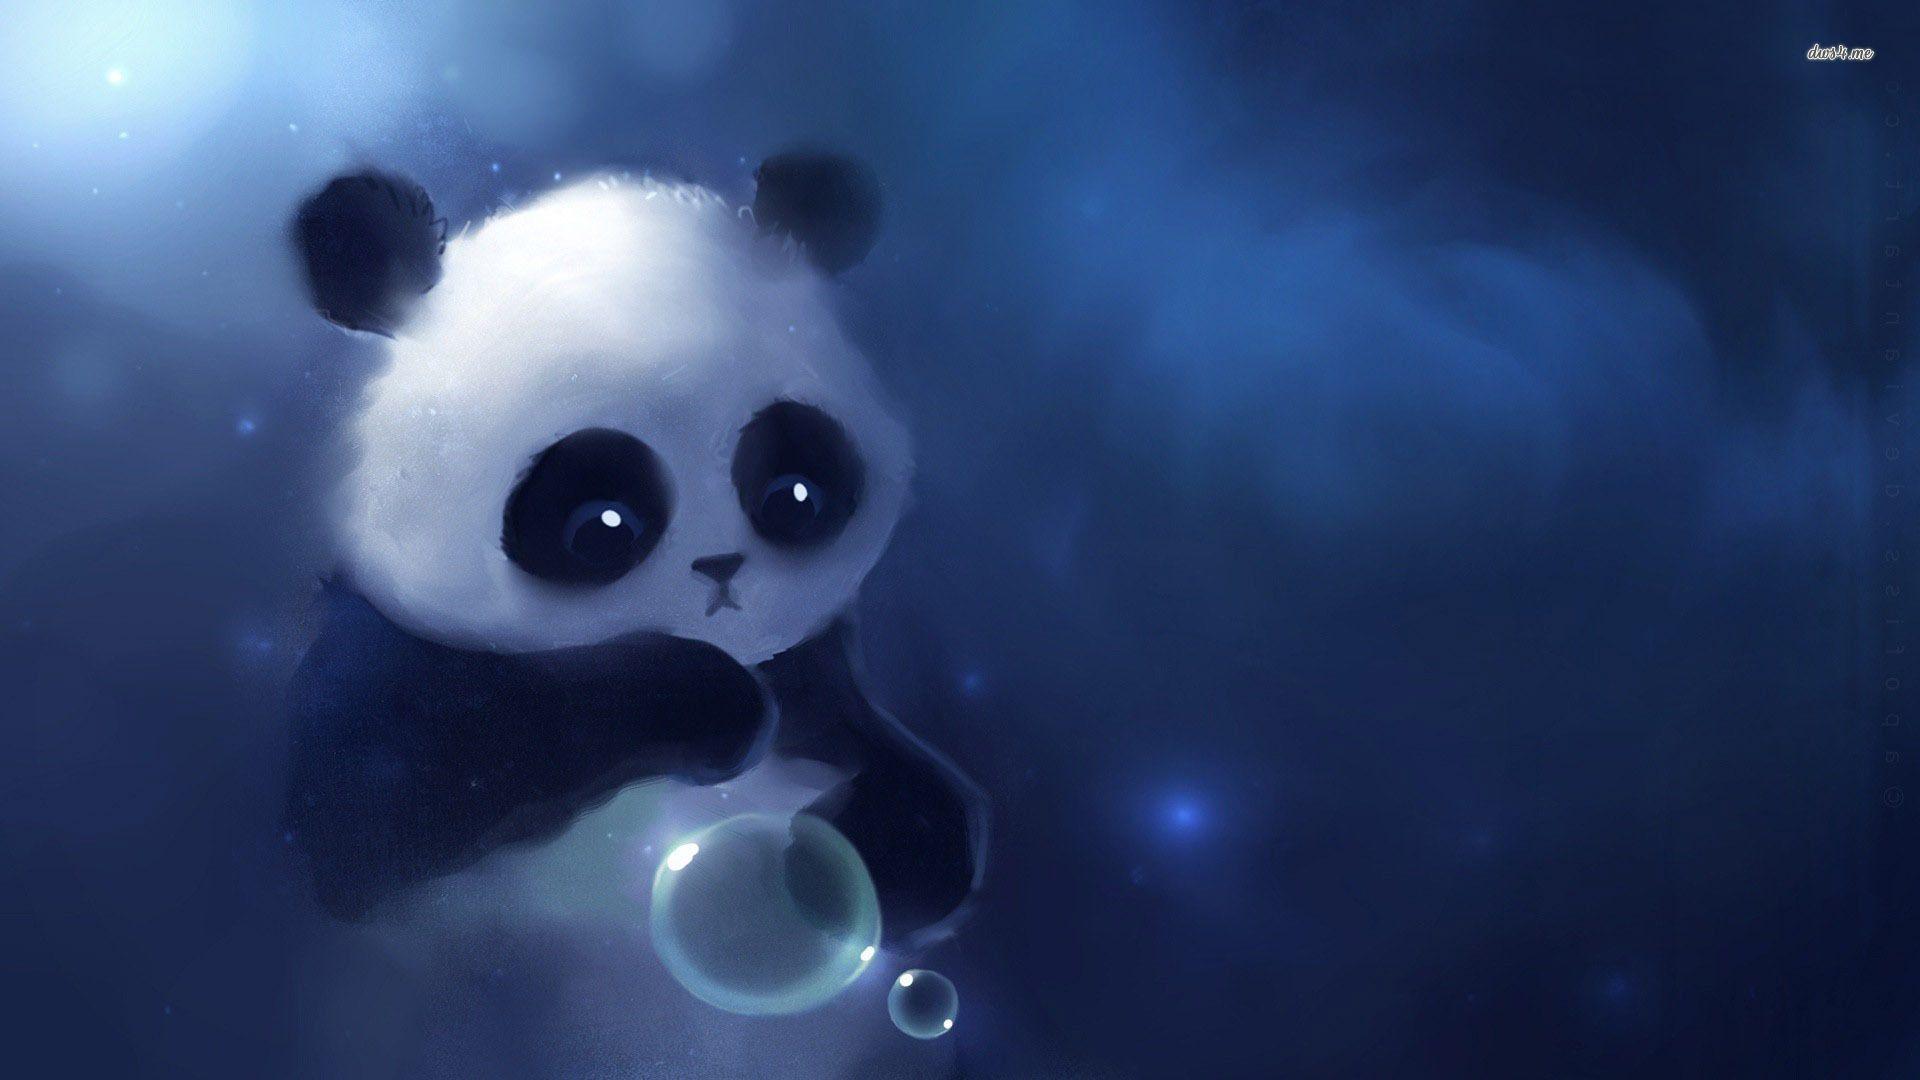 Cute Panda Backgrounds - Wallpaper Cave